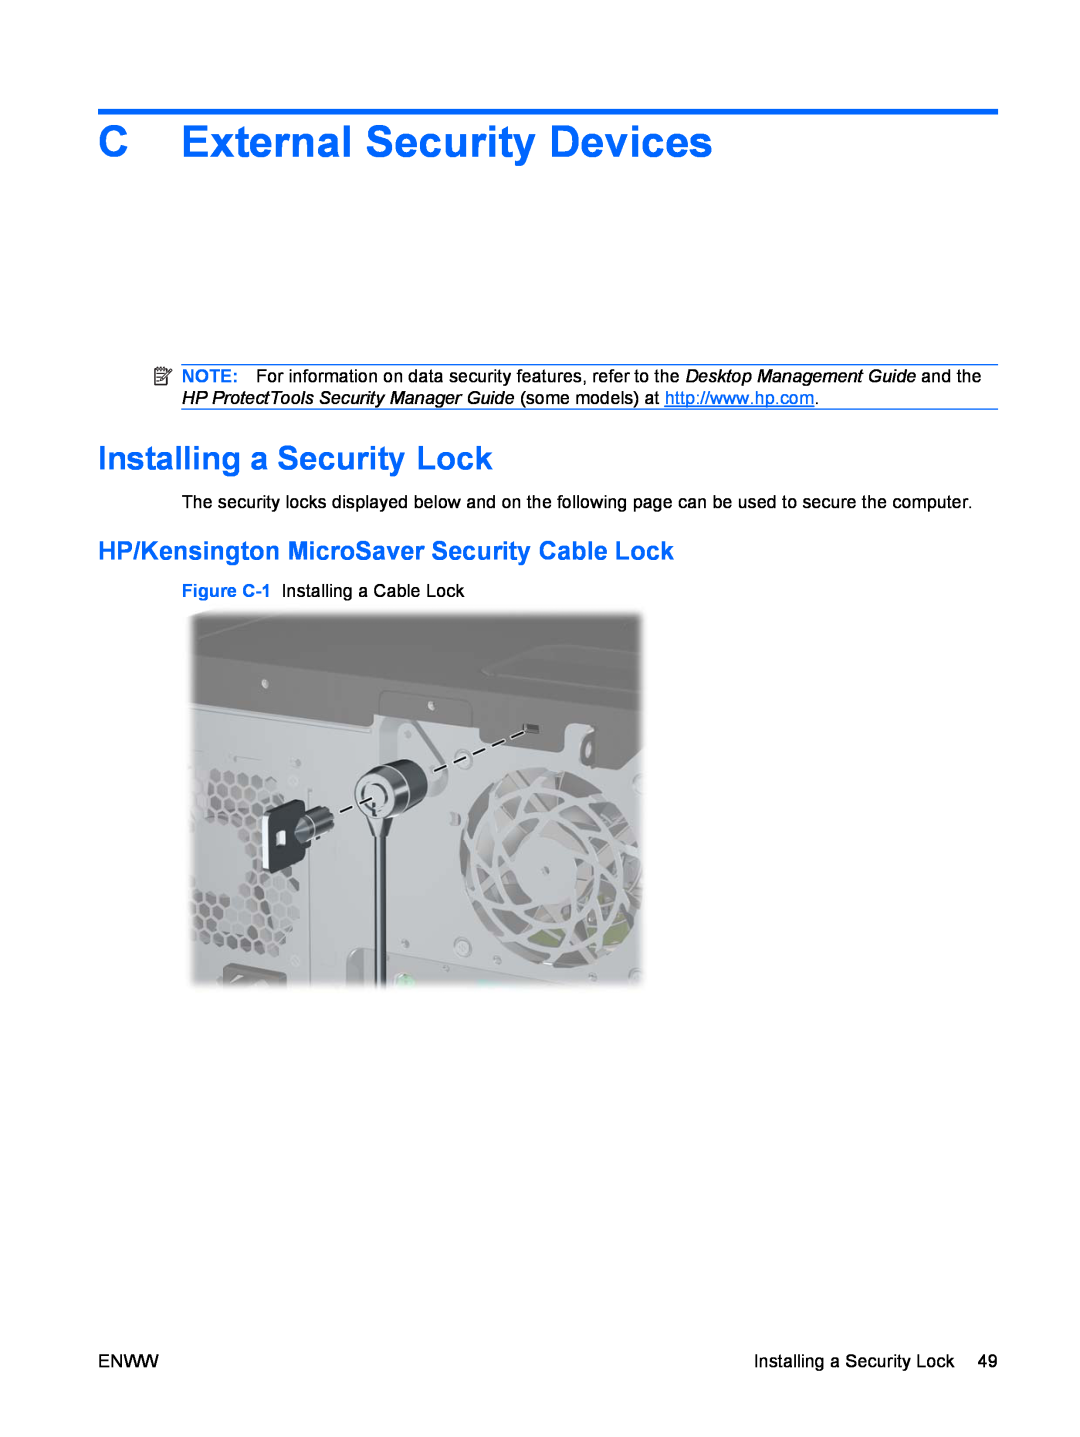 Hitachi 8000 Elite C External Security Devices, Installing a Security Lock, HP/Kensington MicroSaver Security Cable Lock 